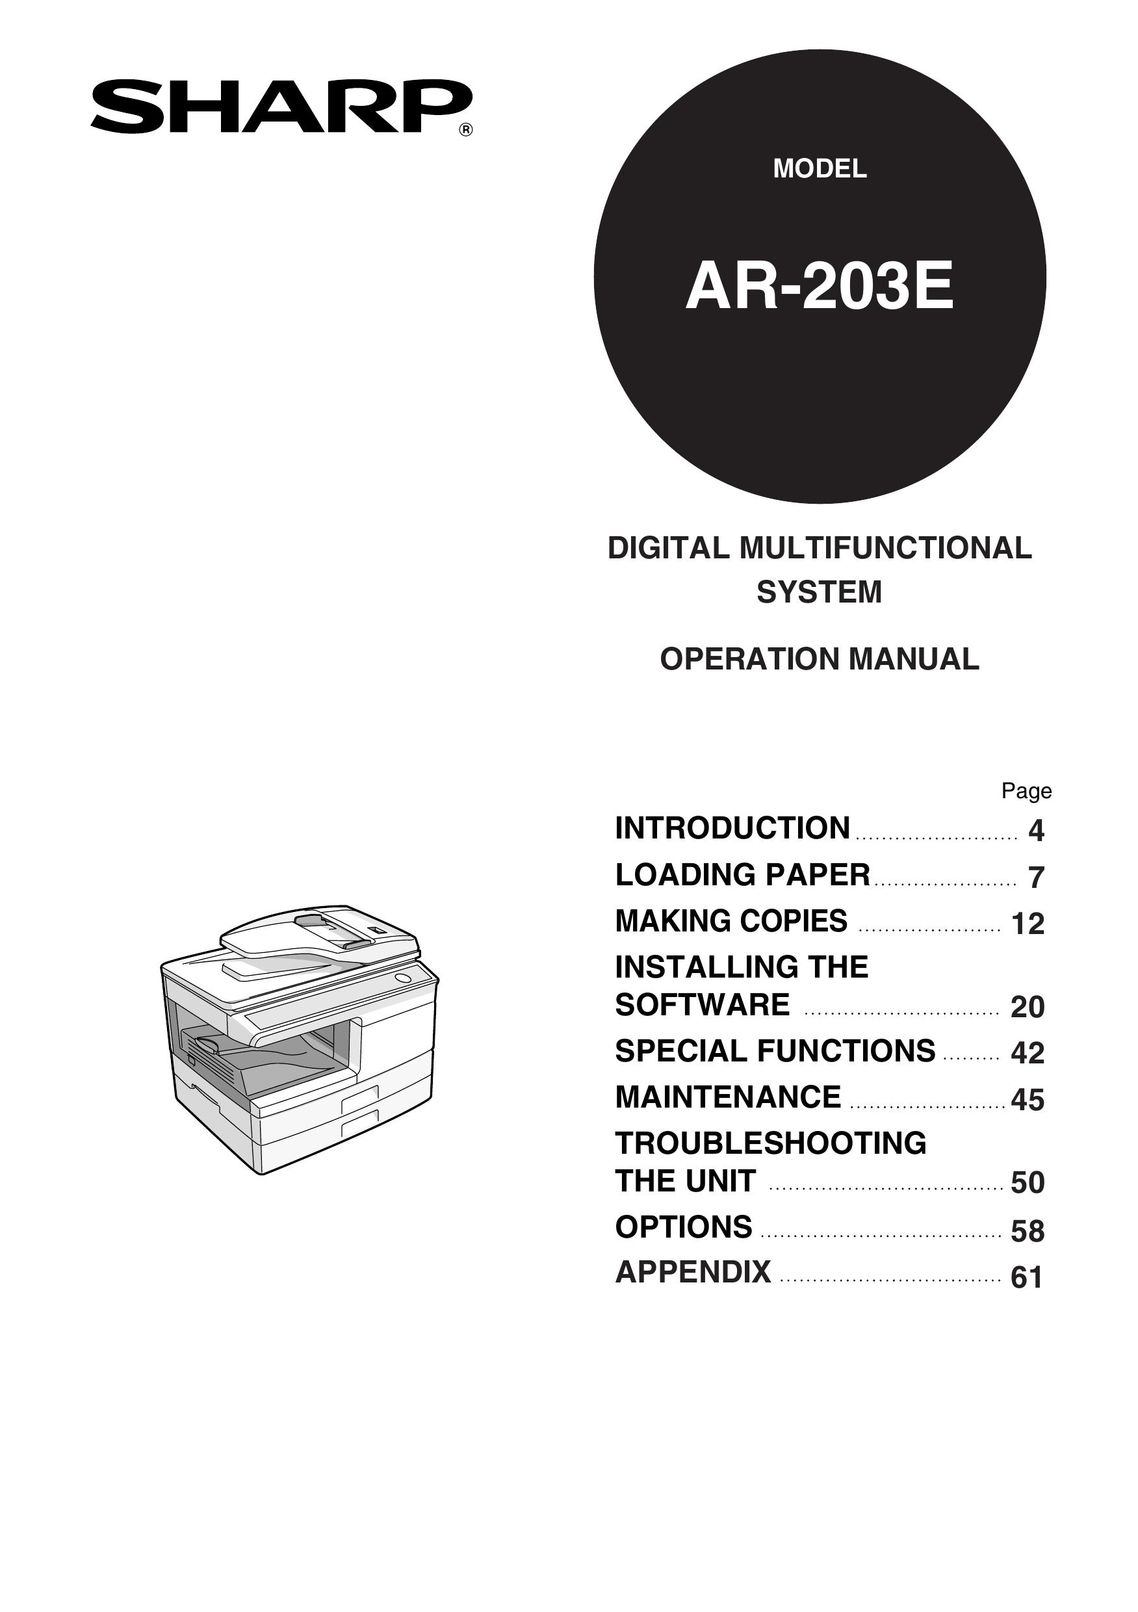 Sharp AR-203E All in One Printer User Manual